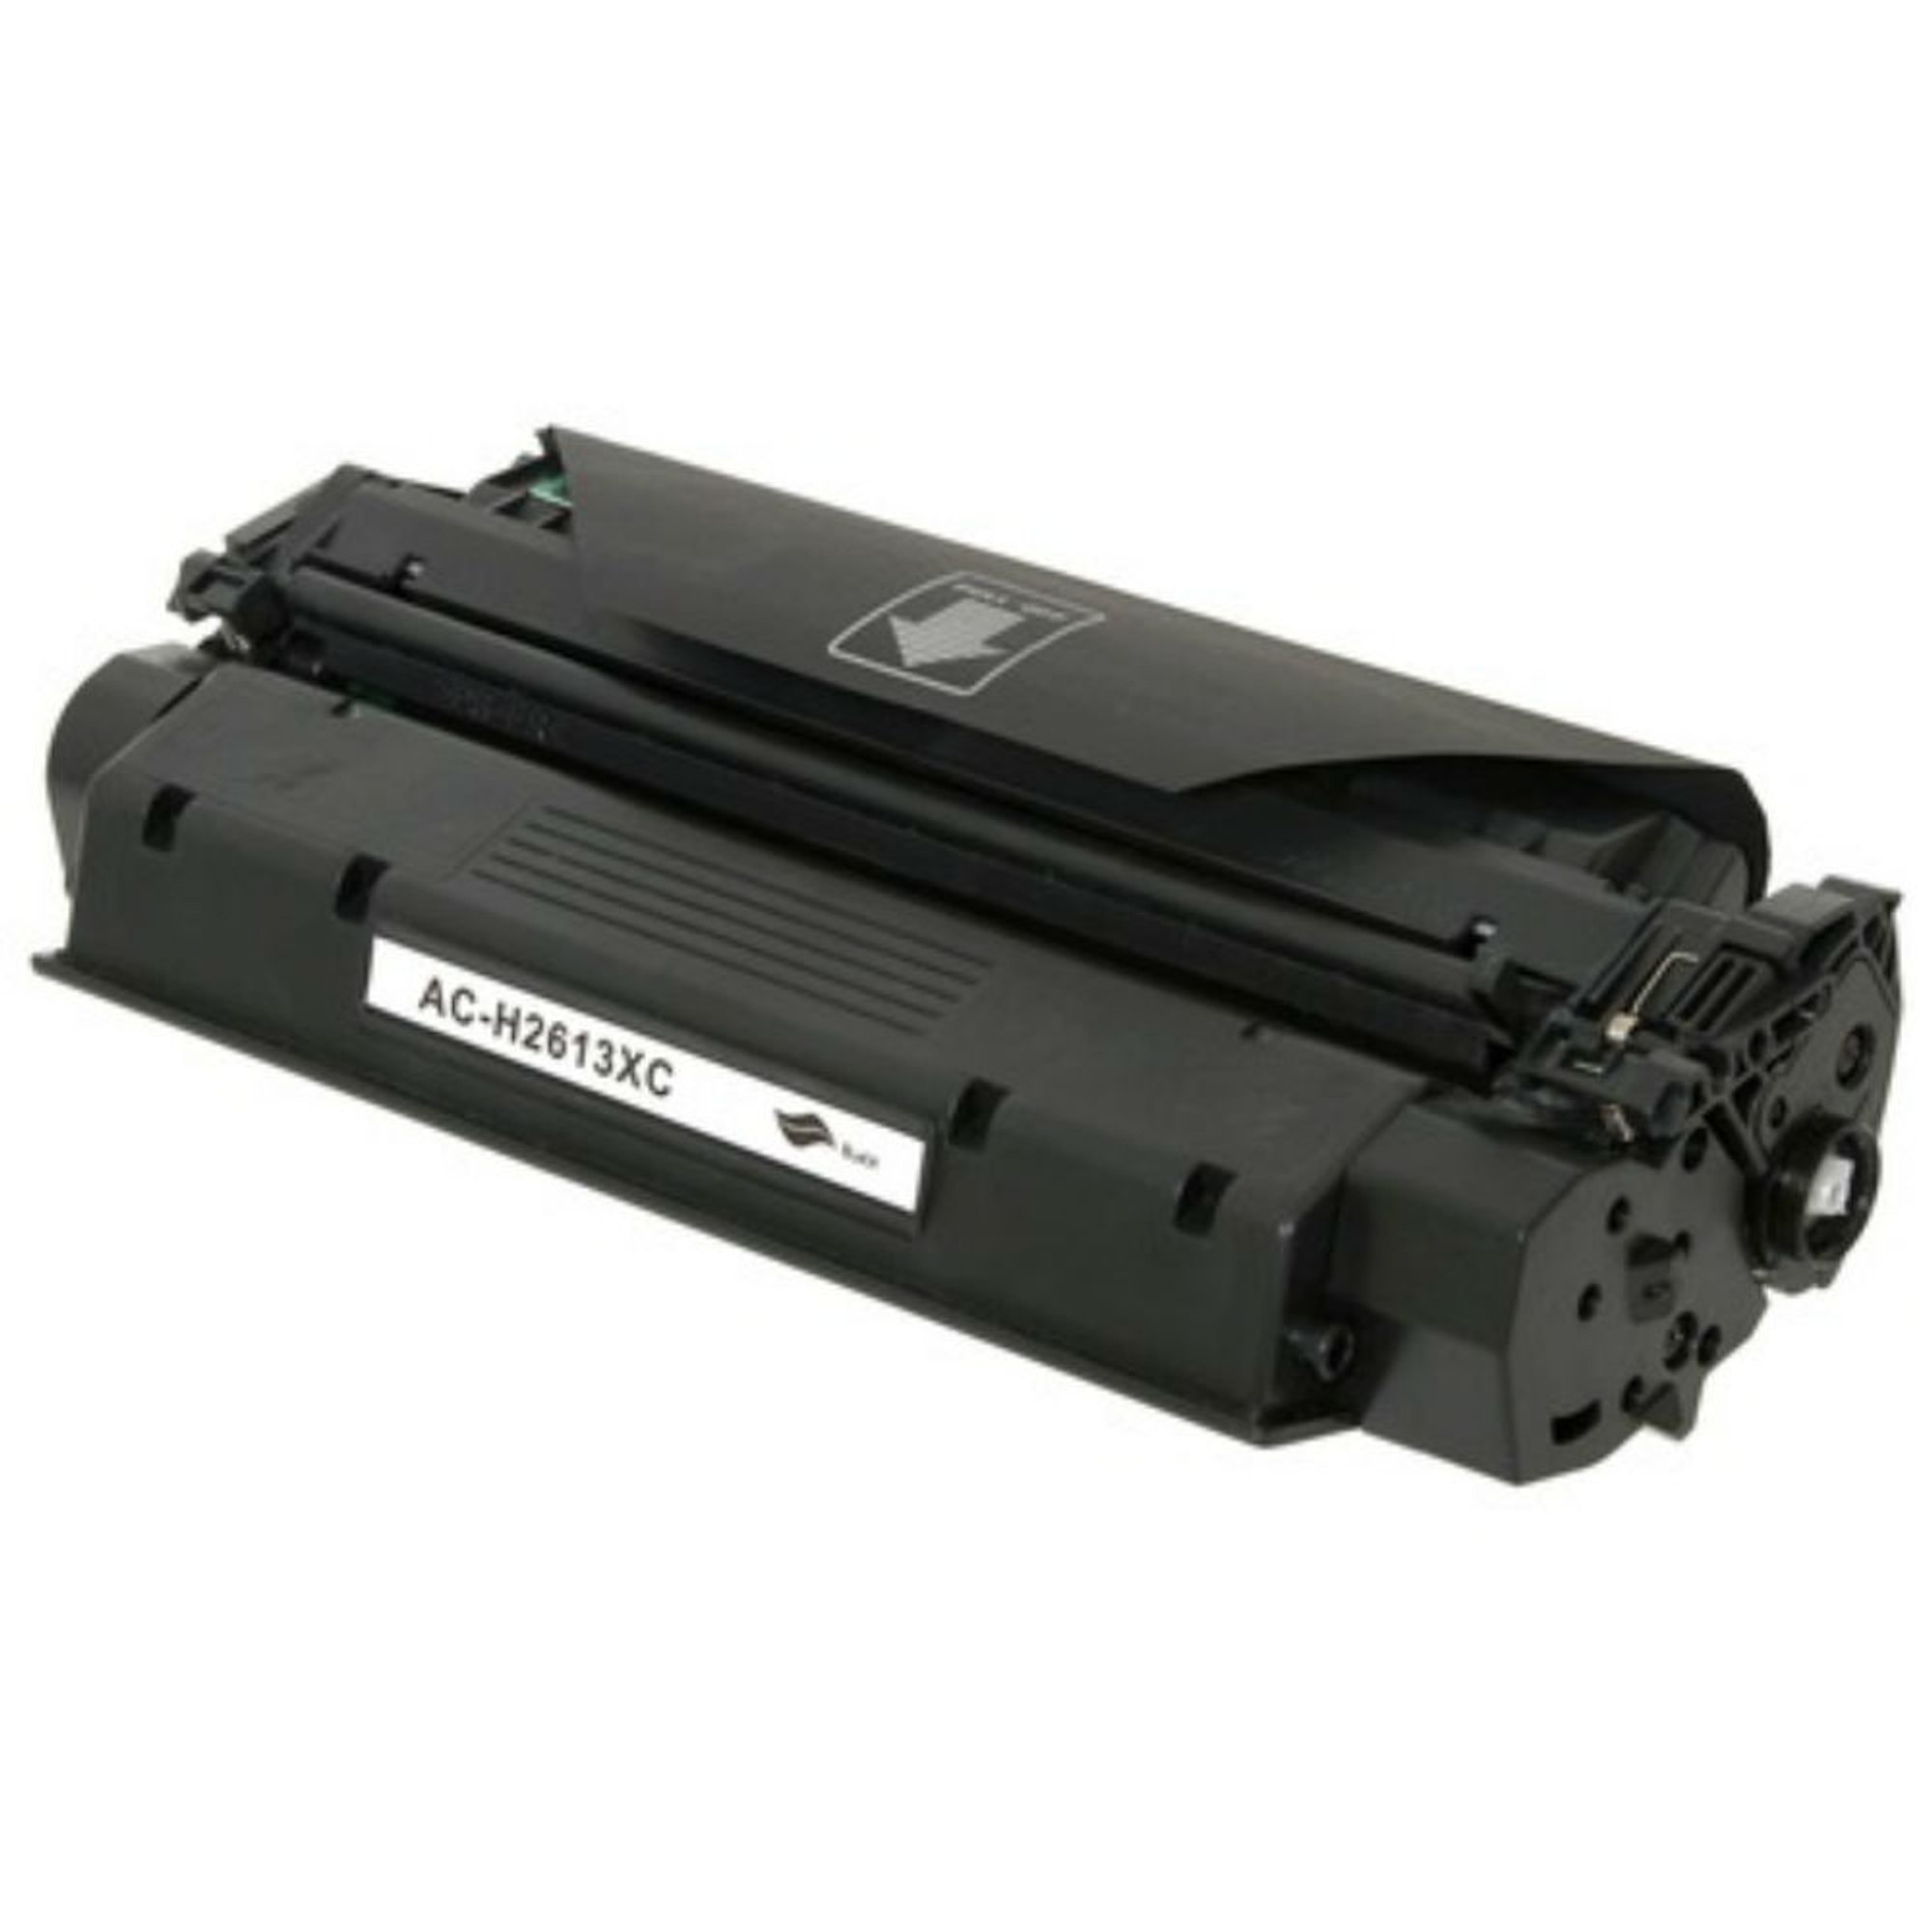 hp laserjet 1300 maintenance kit